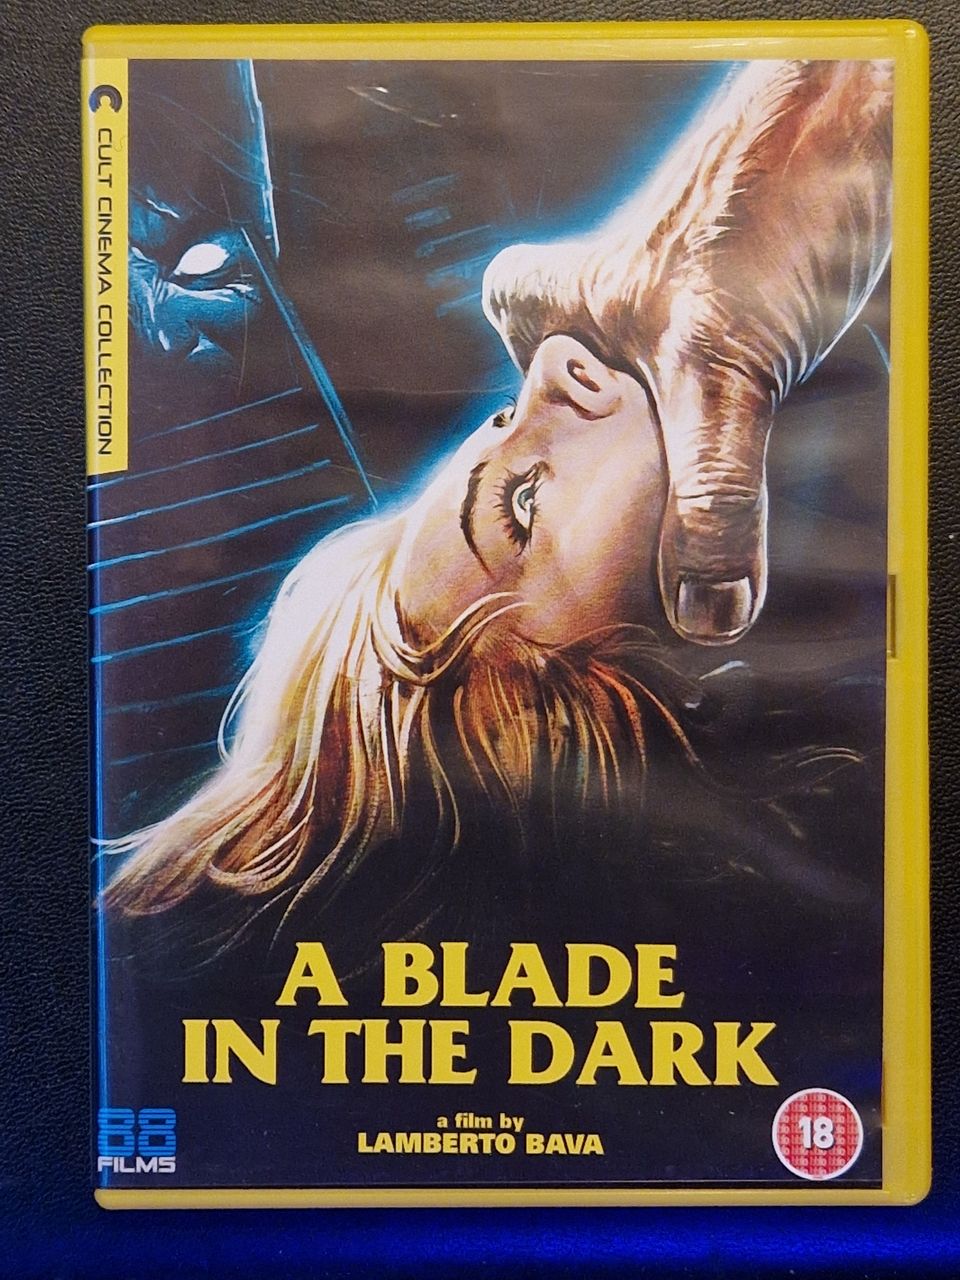 A Blade in the Dark - 88films DVD